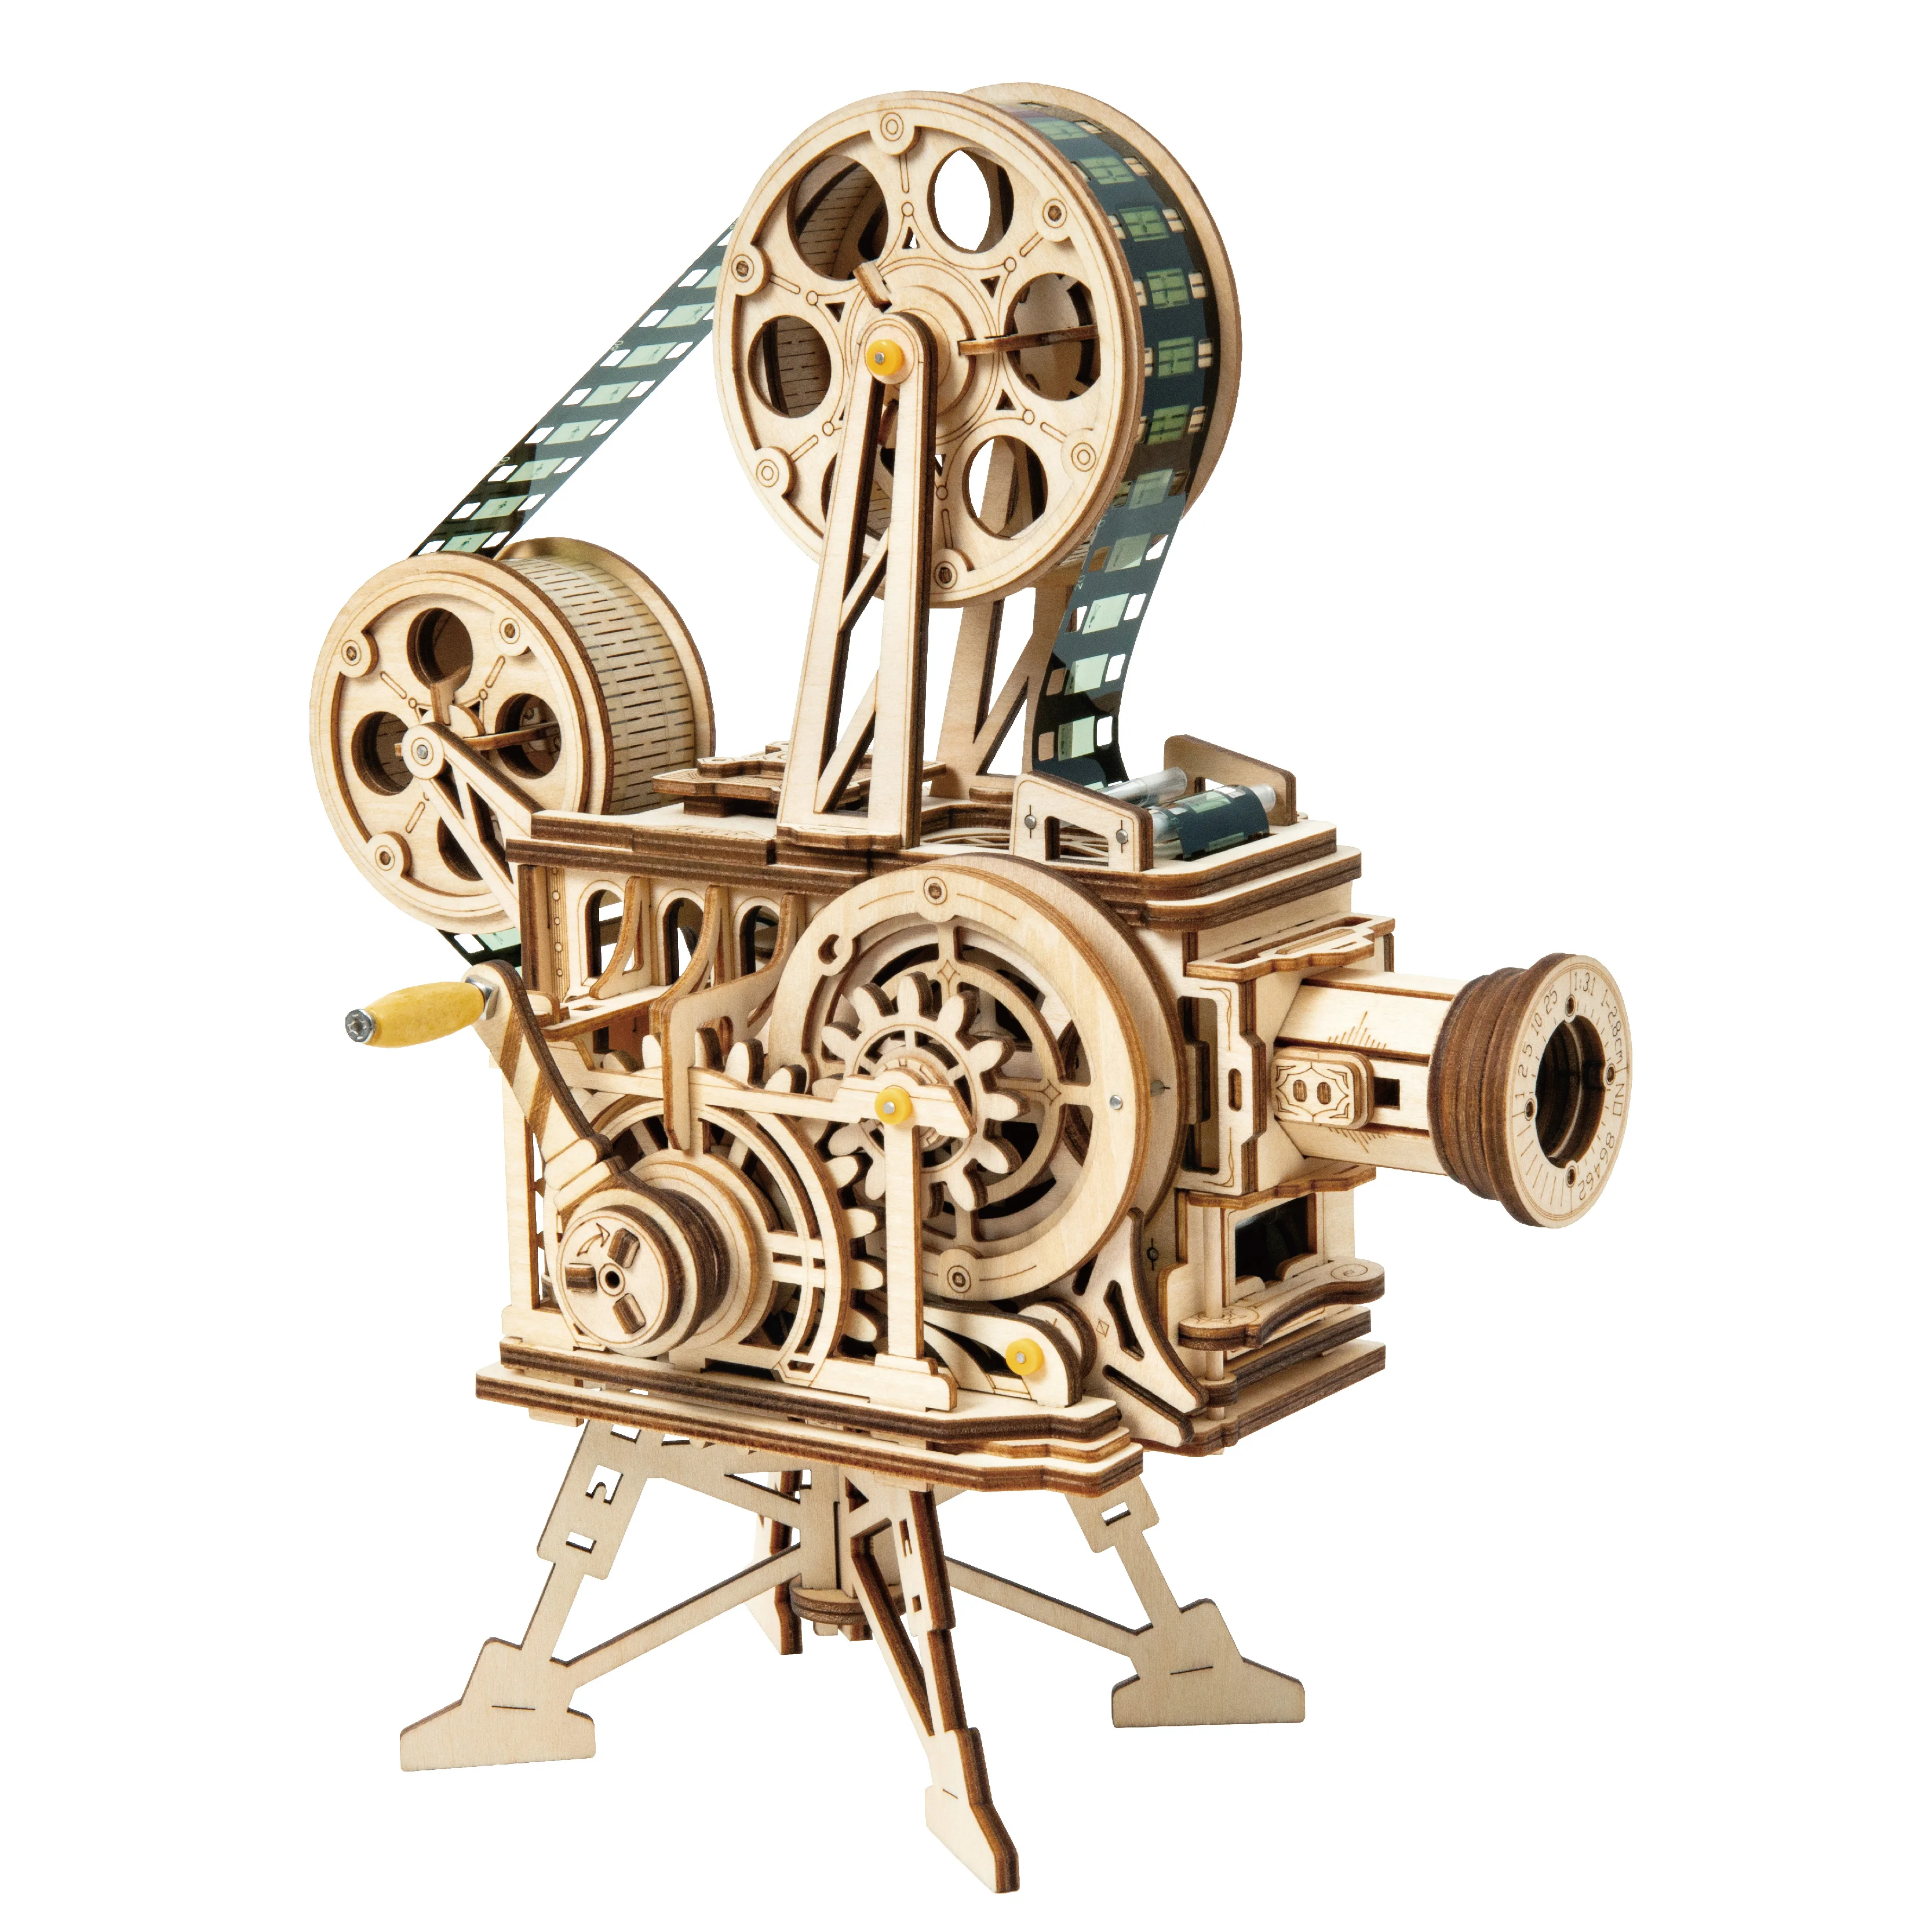 Robotime DIY 3D Wooden Mechanical Puzzle Model Building Kits Laser Cutting Action by Clockwork Gift Toys for Children LG/LK/AM - купить по